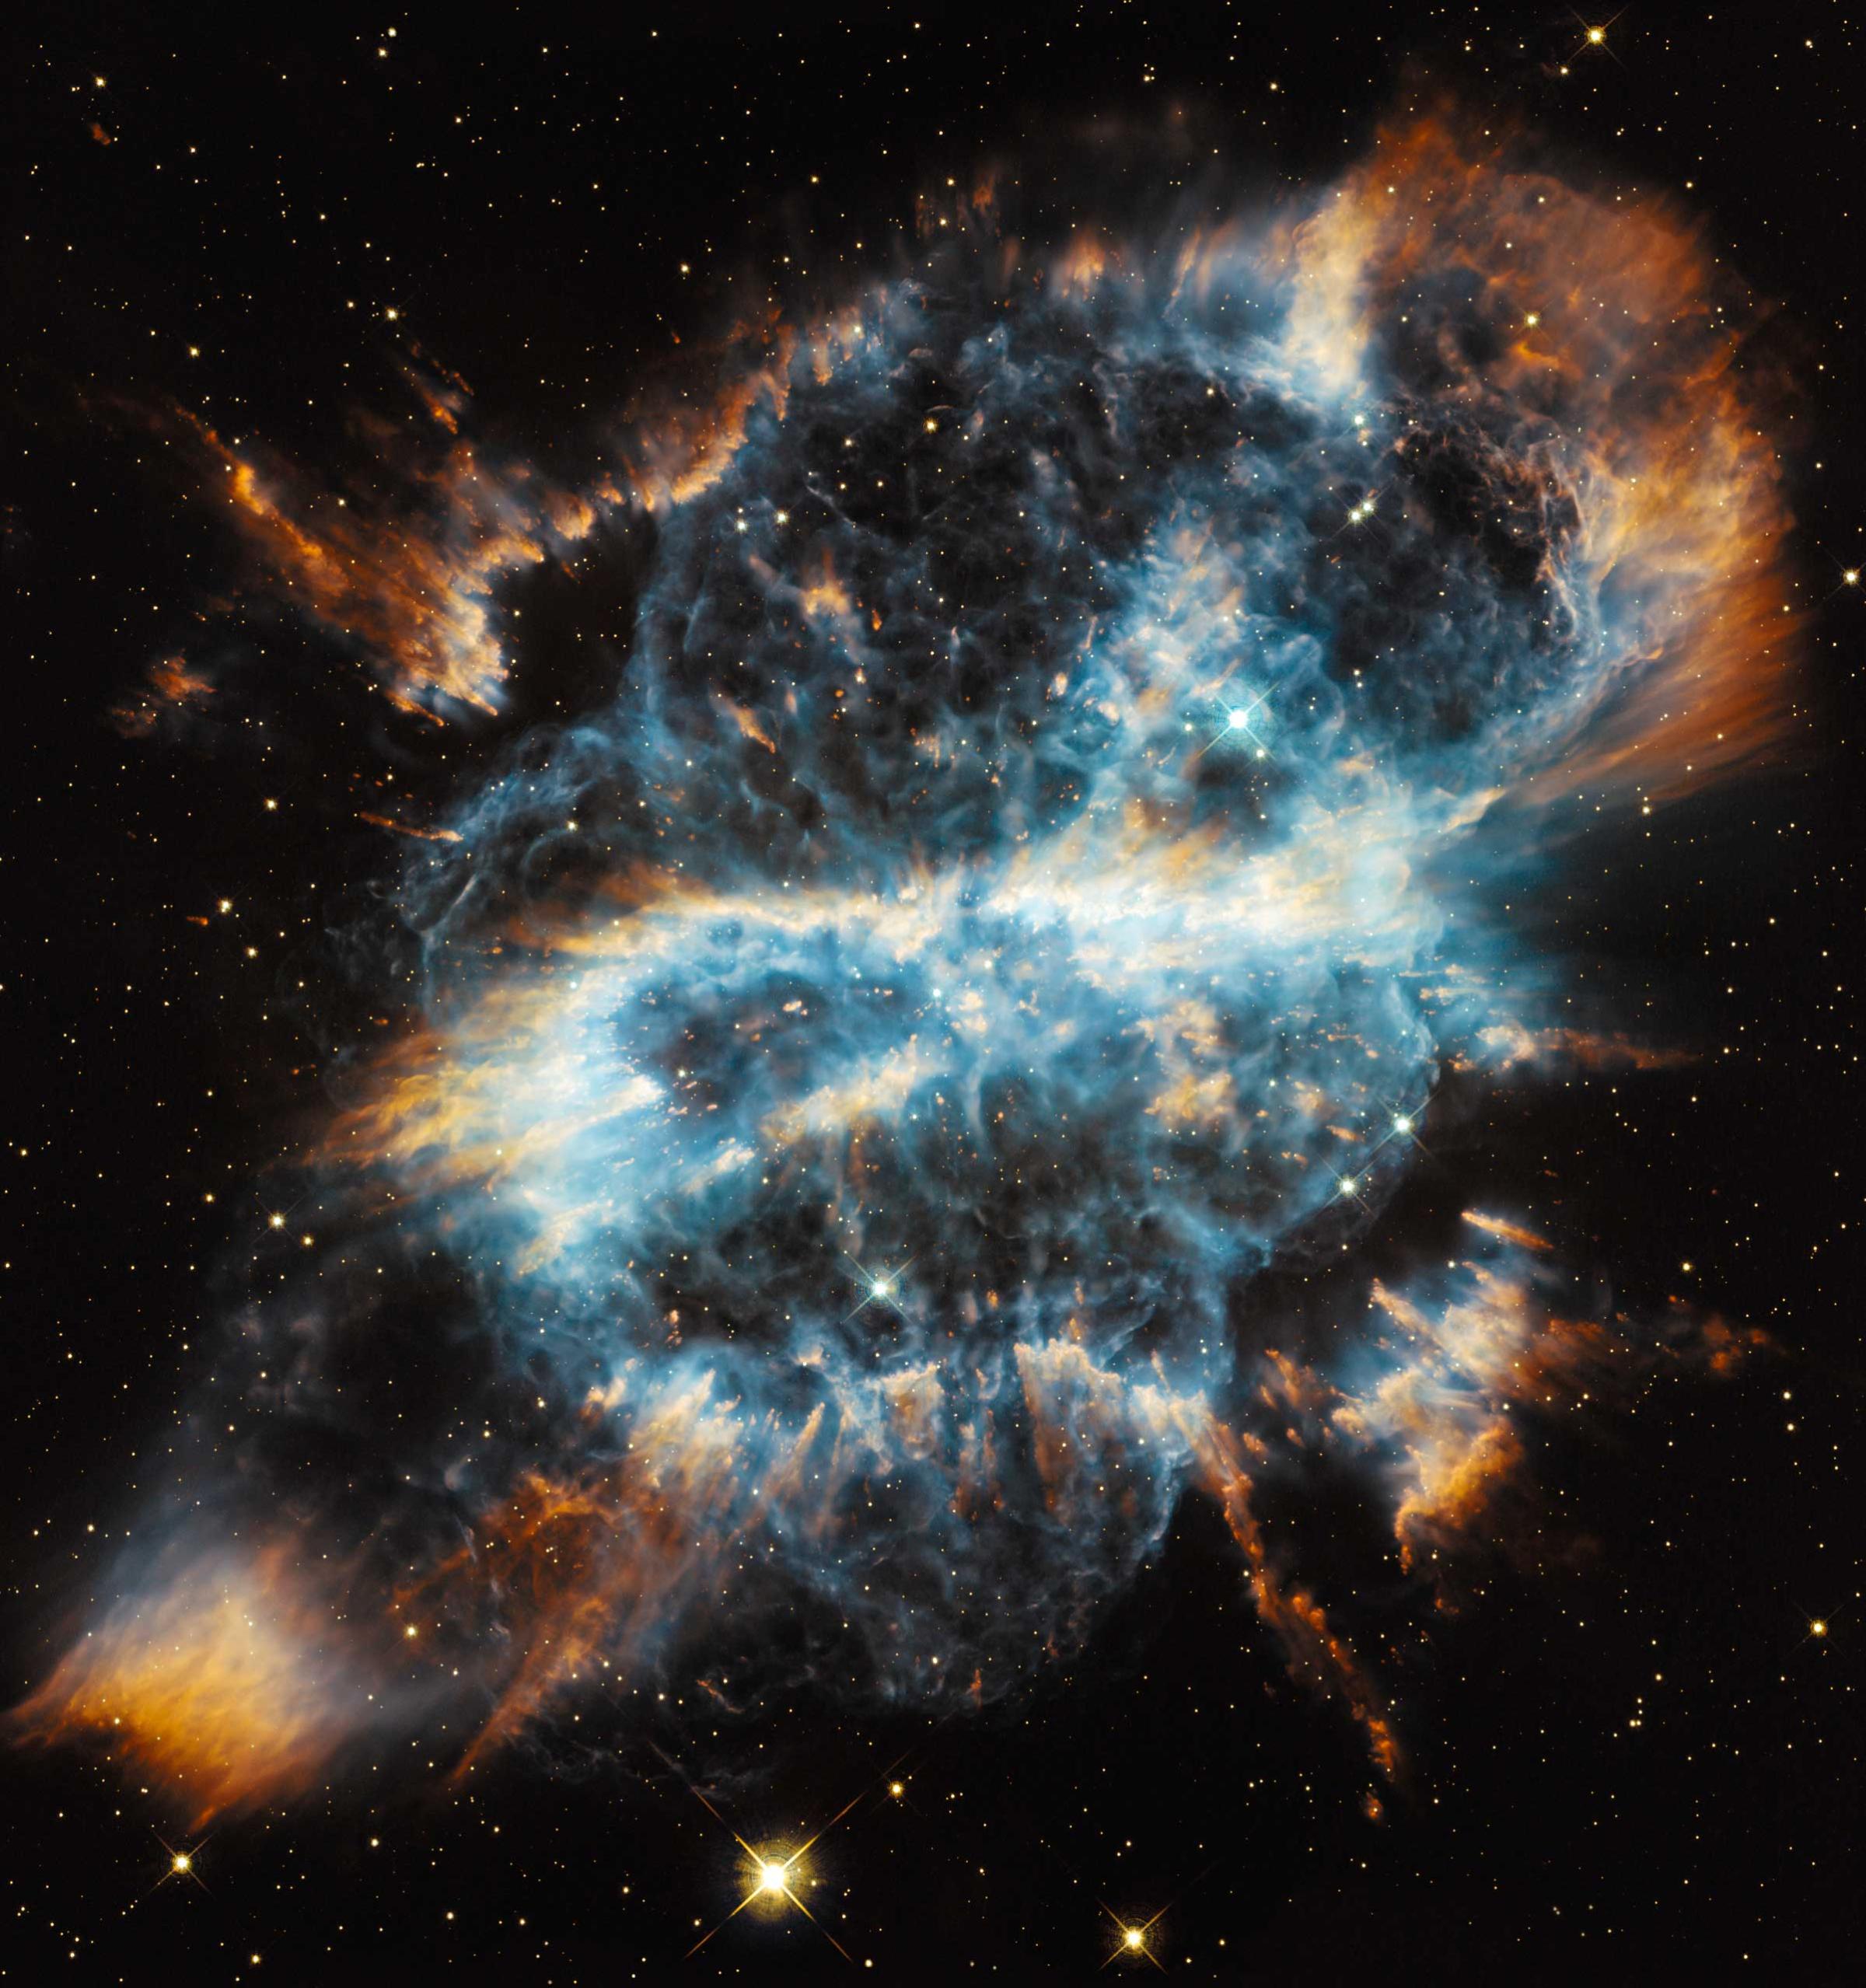 Planetary Nebula NGC 5189